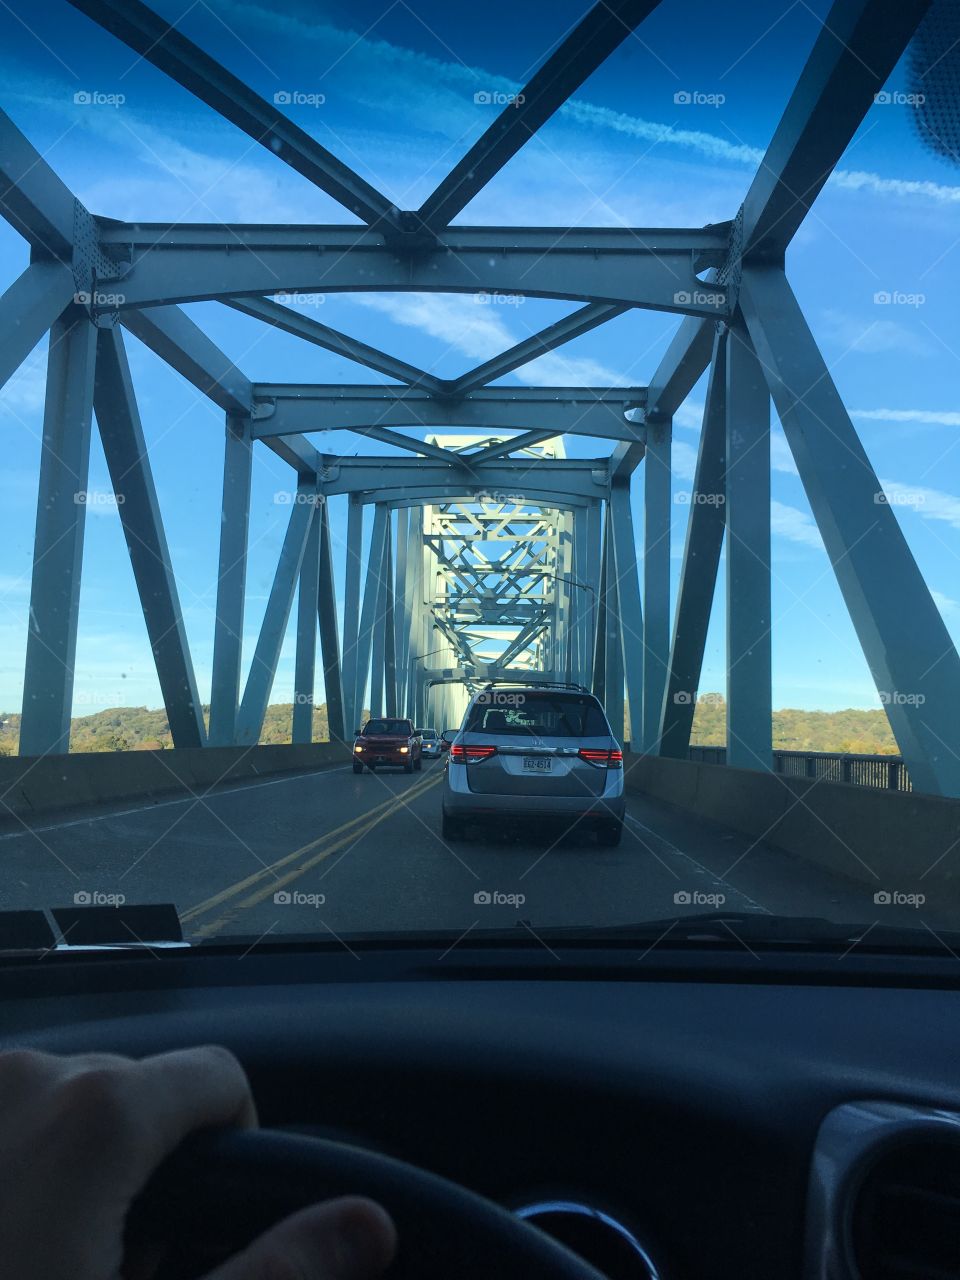 Awesome bridge 